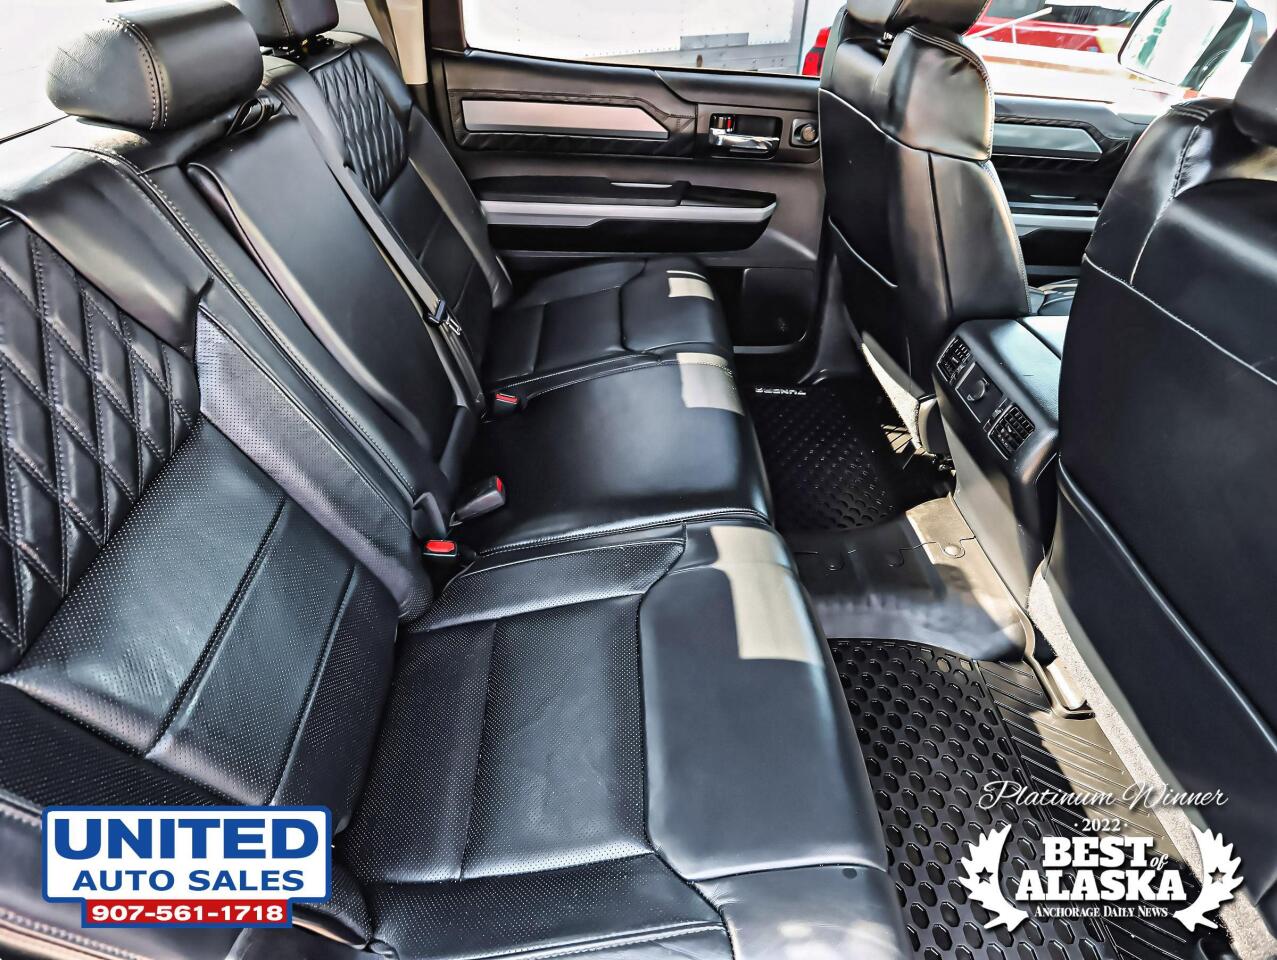 2019 Toyota Tundra Platinum 4x4 4dr CrewMax Cab Pickup SB (5.7L V8) 16